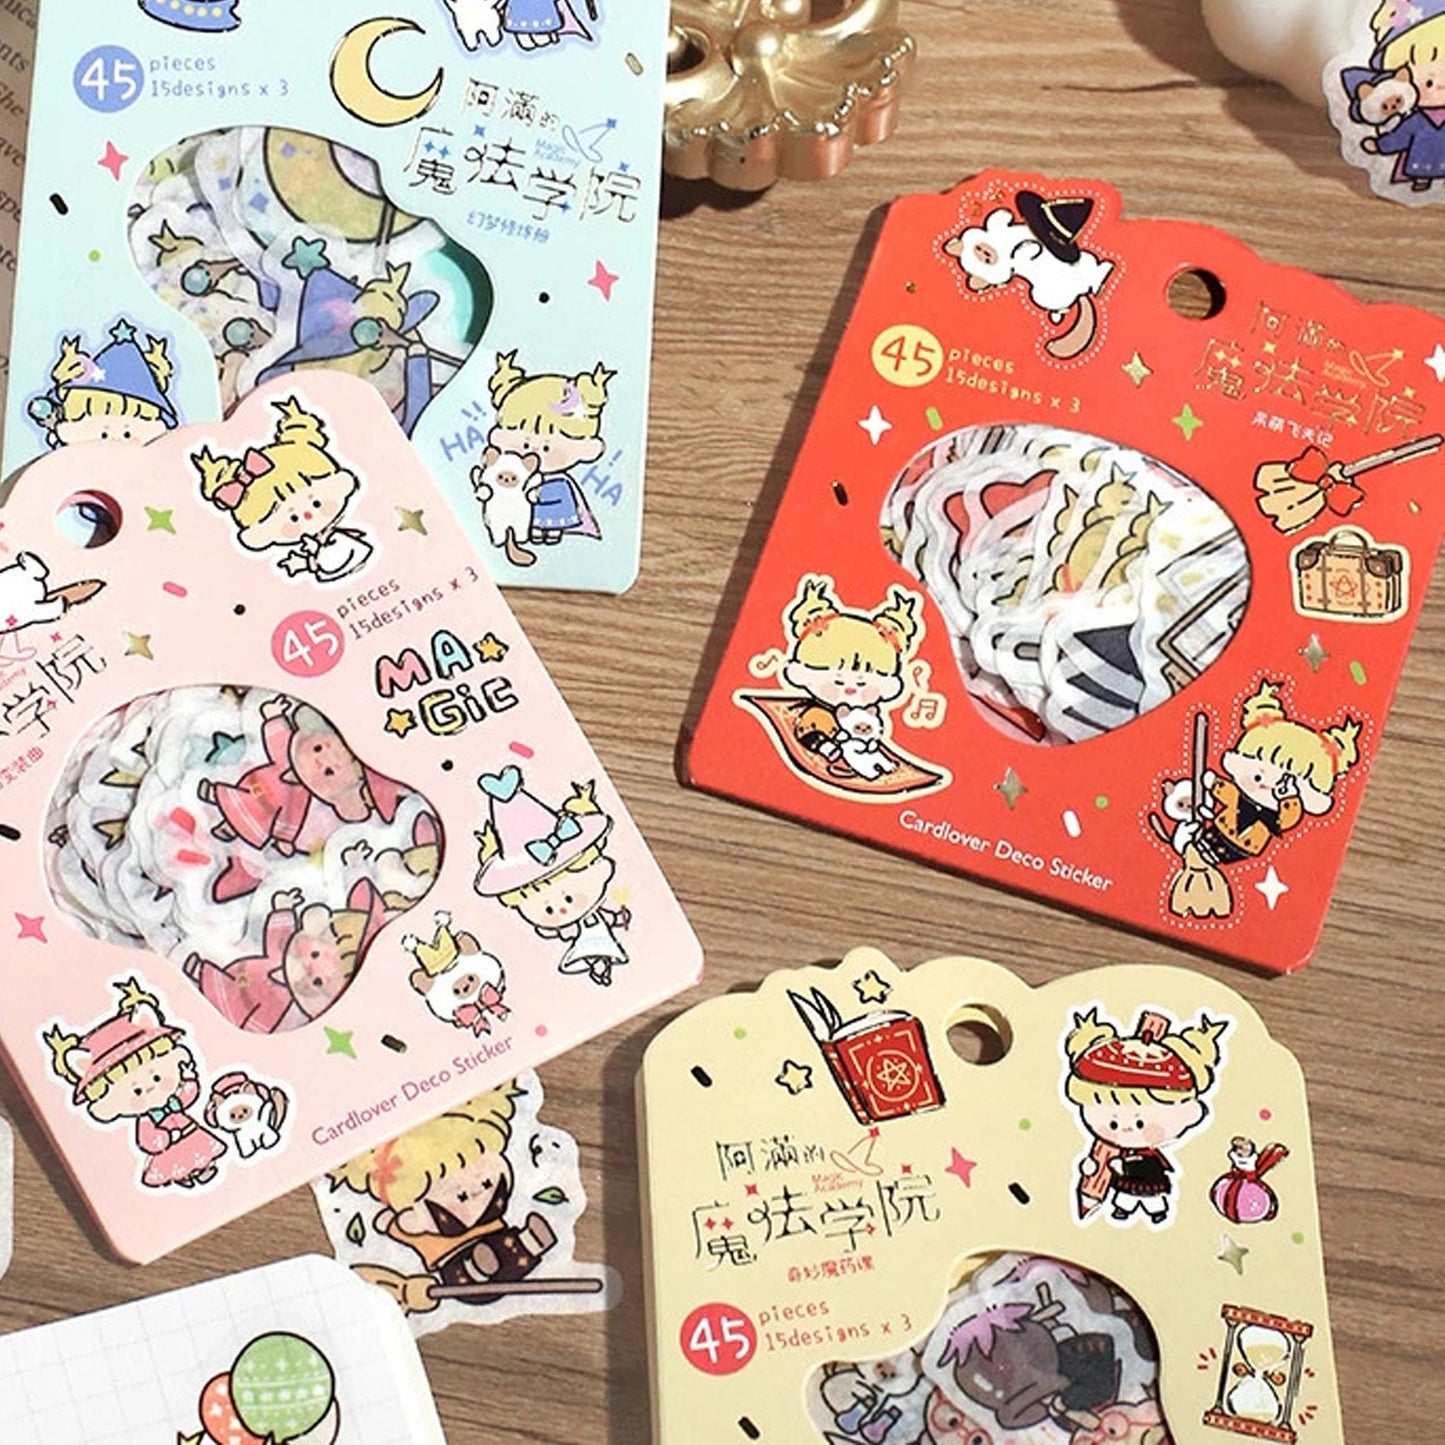 Kawaii Planner Stickers, Magic Sticker Pack, Kawaii Stickers, Cute Animal Stickers, Kawaii Boy and Girl Stickers, Magic Spell Stickers b1i5